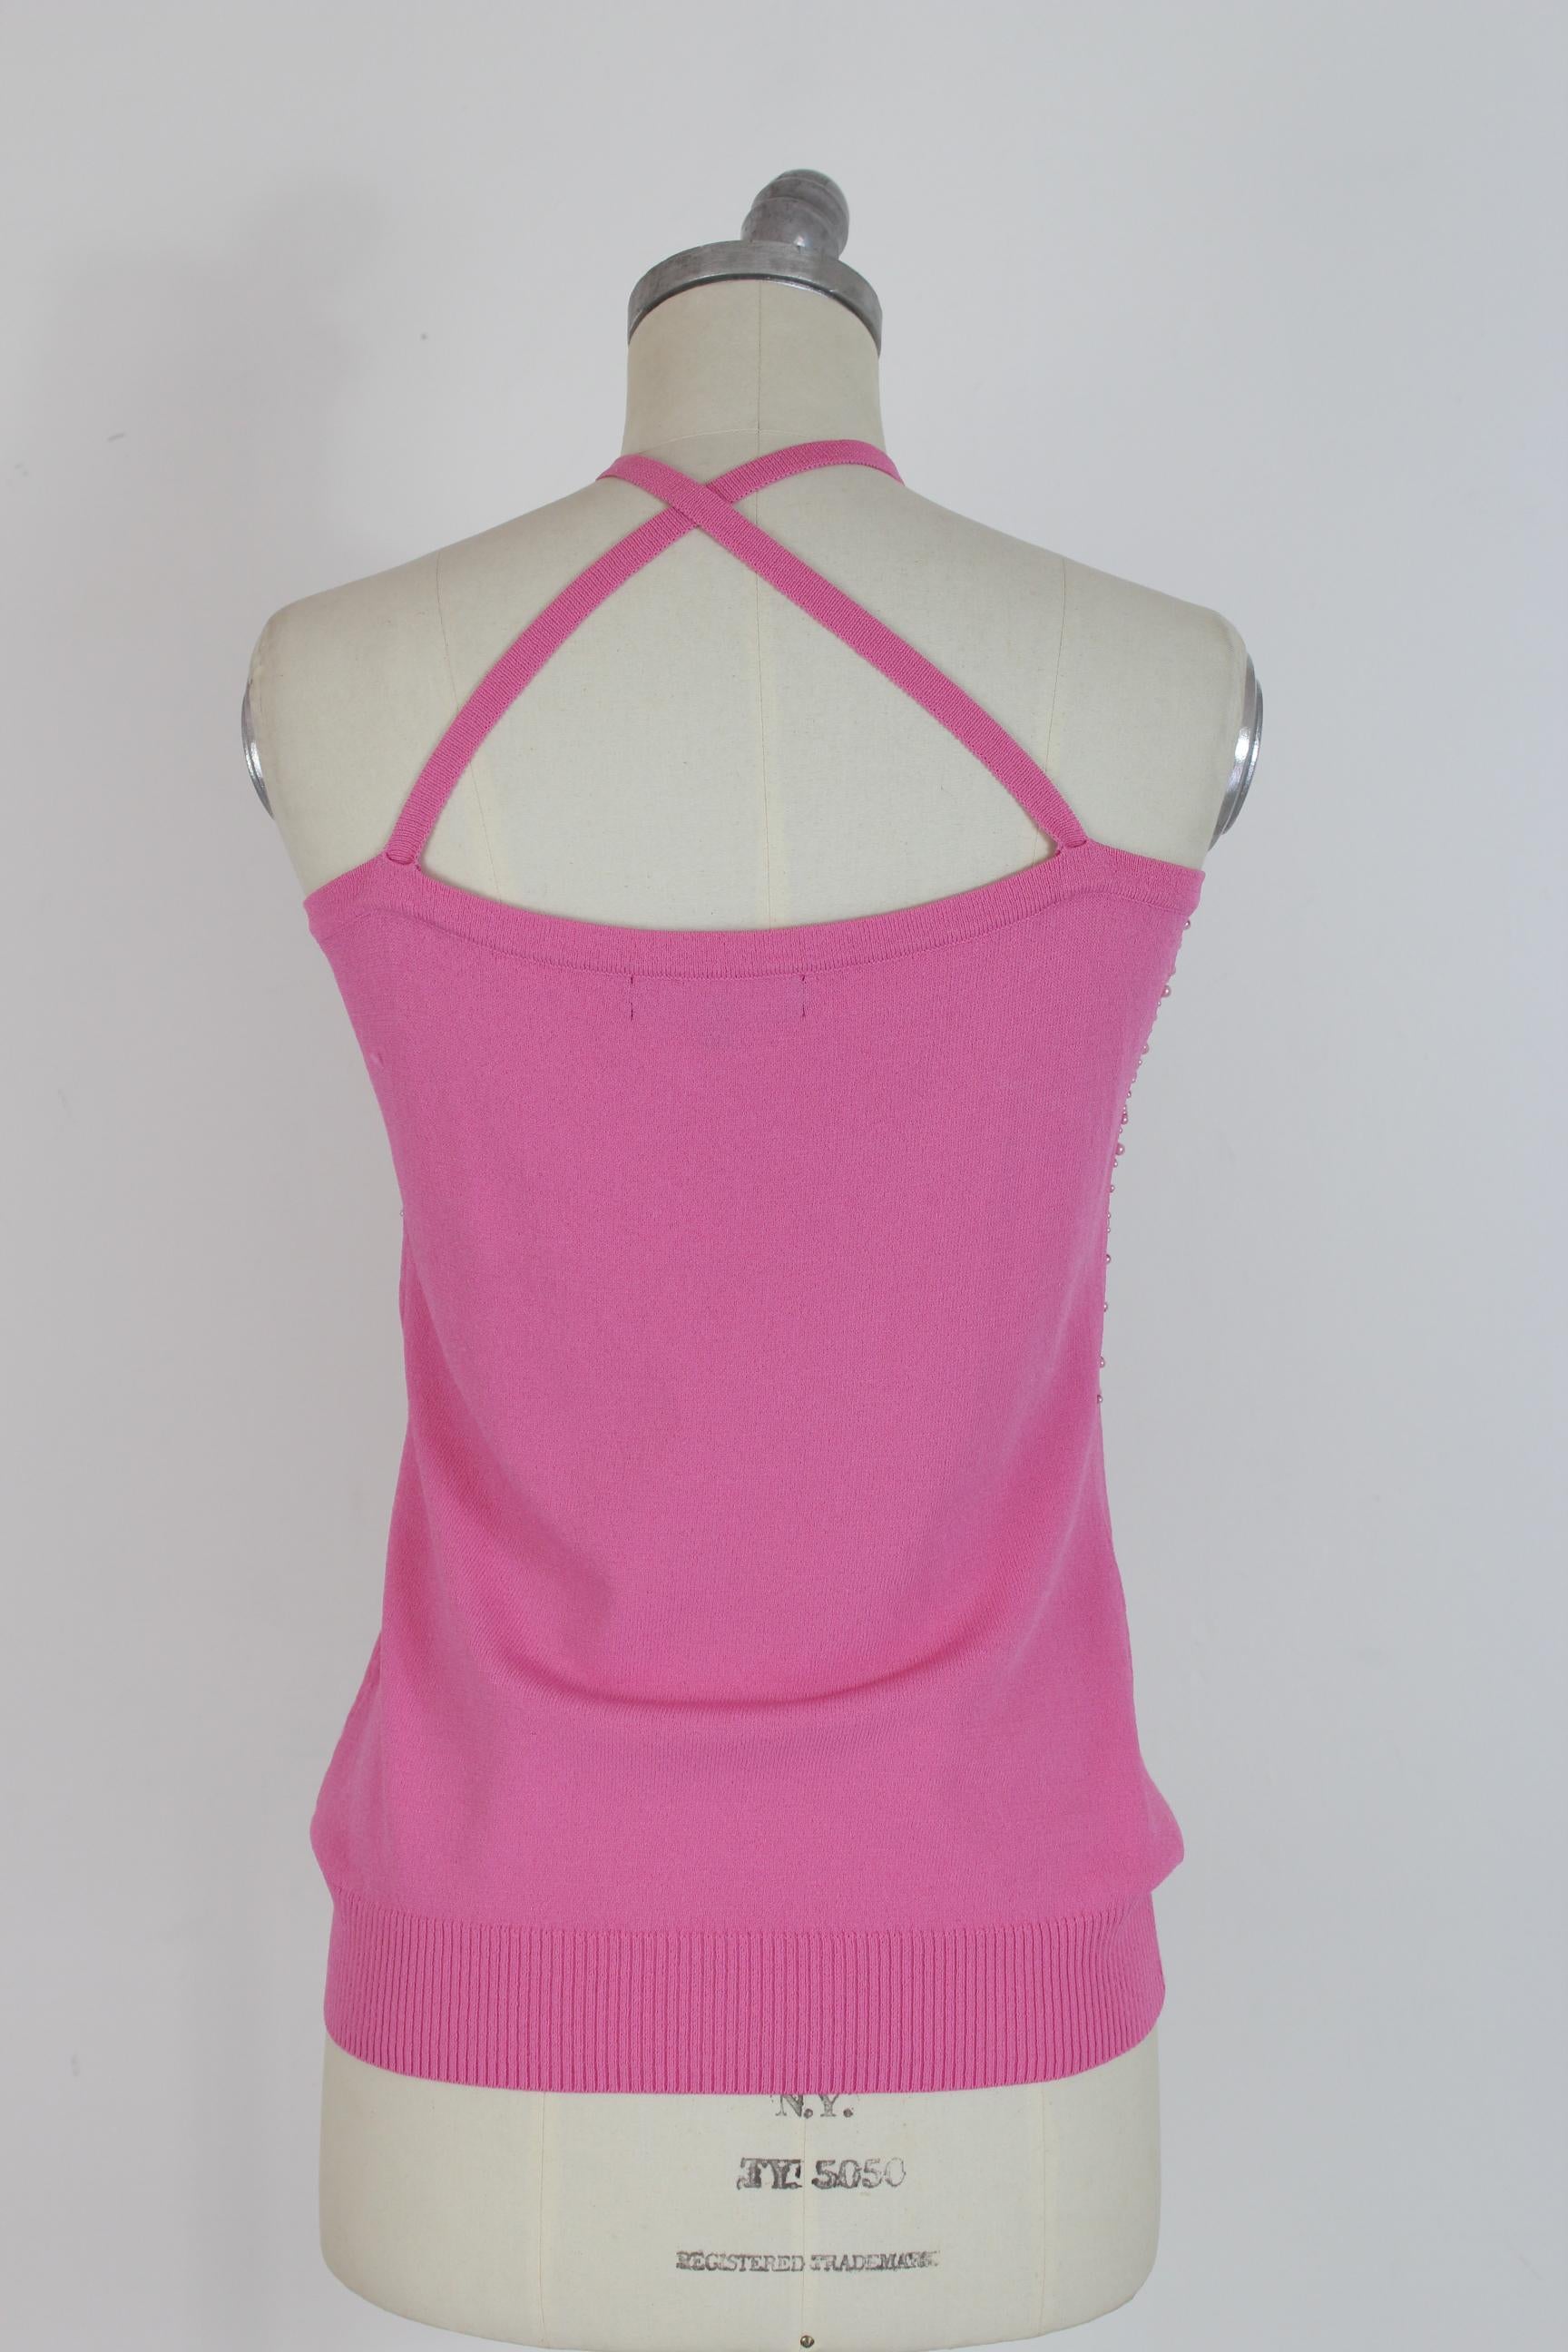 Gai Mattiolo elegant 90s vintage women's shirt. Evening top with beaded applications, pink color. 65% rayon, 35% nylon. Excellent vintage conditions.

Size: 46 It 12 Us 14 Uk

Shoulder: 44 cm

Bust / Chest: 46 cm

Length: 44 cm